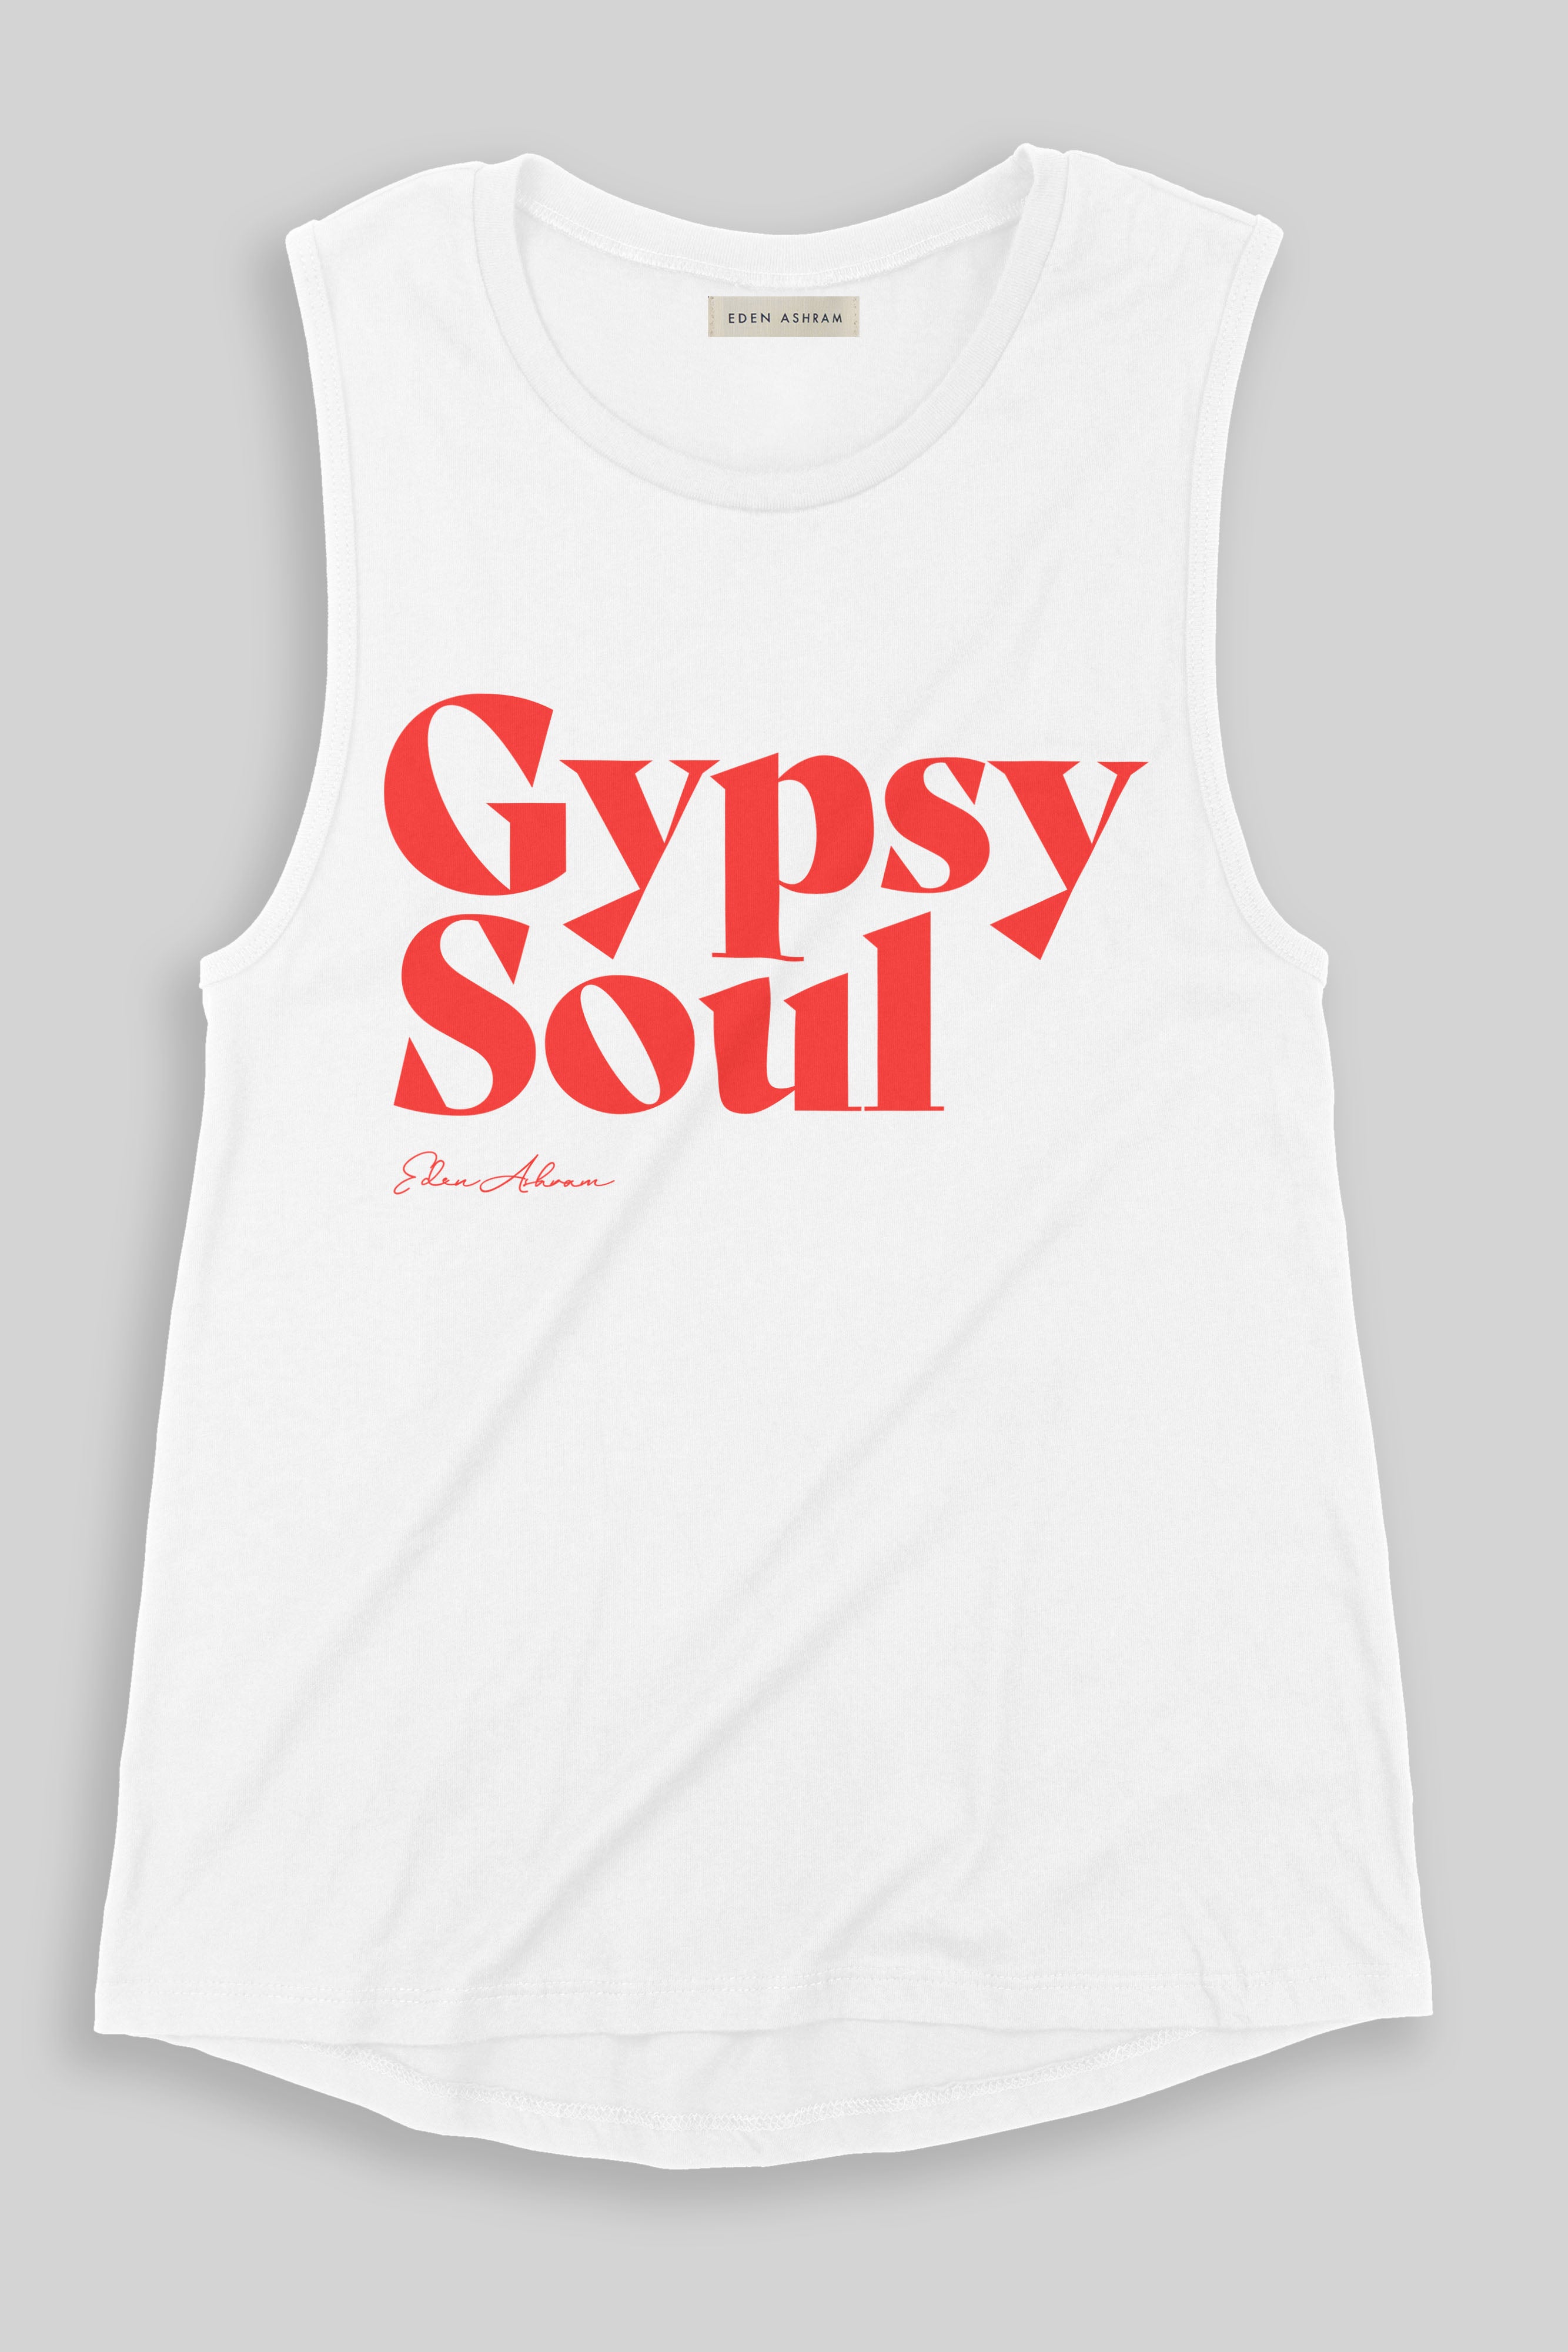 EDEN ASHRAM Gypsy Soul Jersey Muscle Tank Vintage White